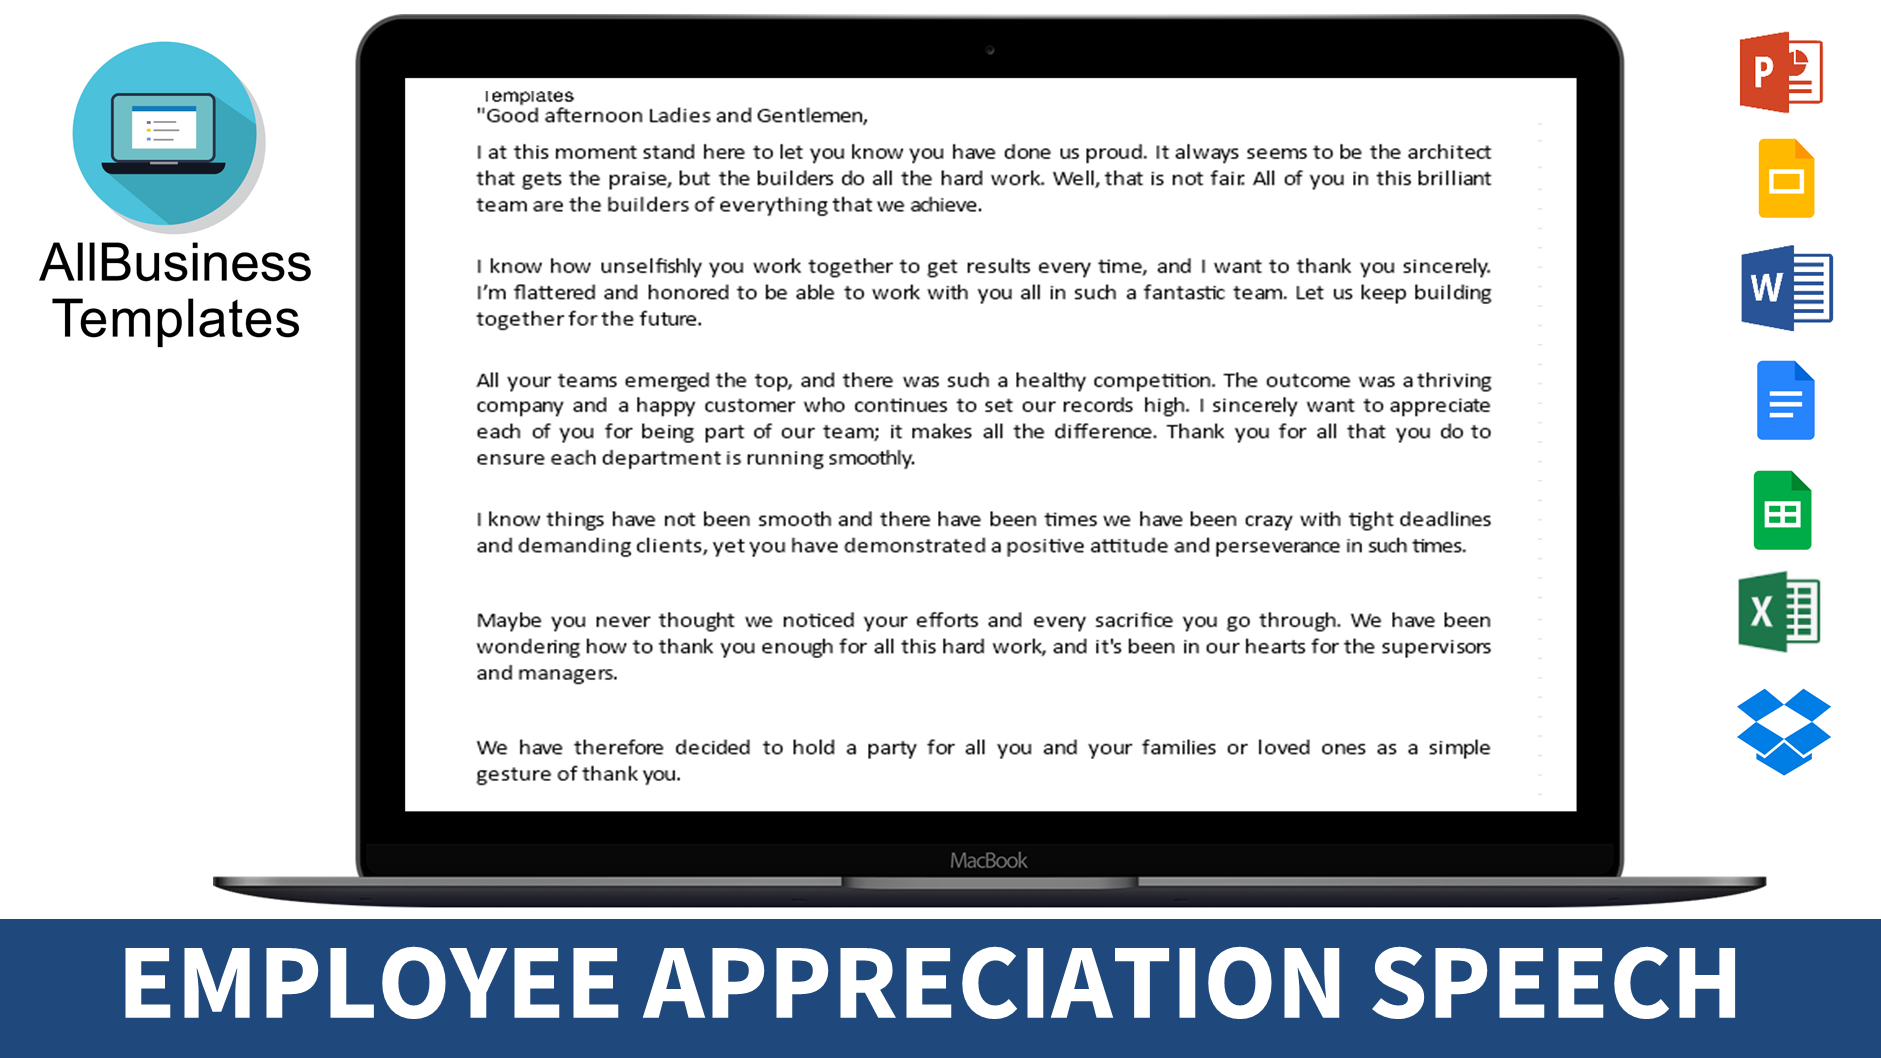 Employee Appreciation Speech main image